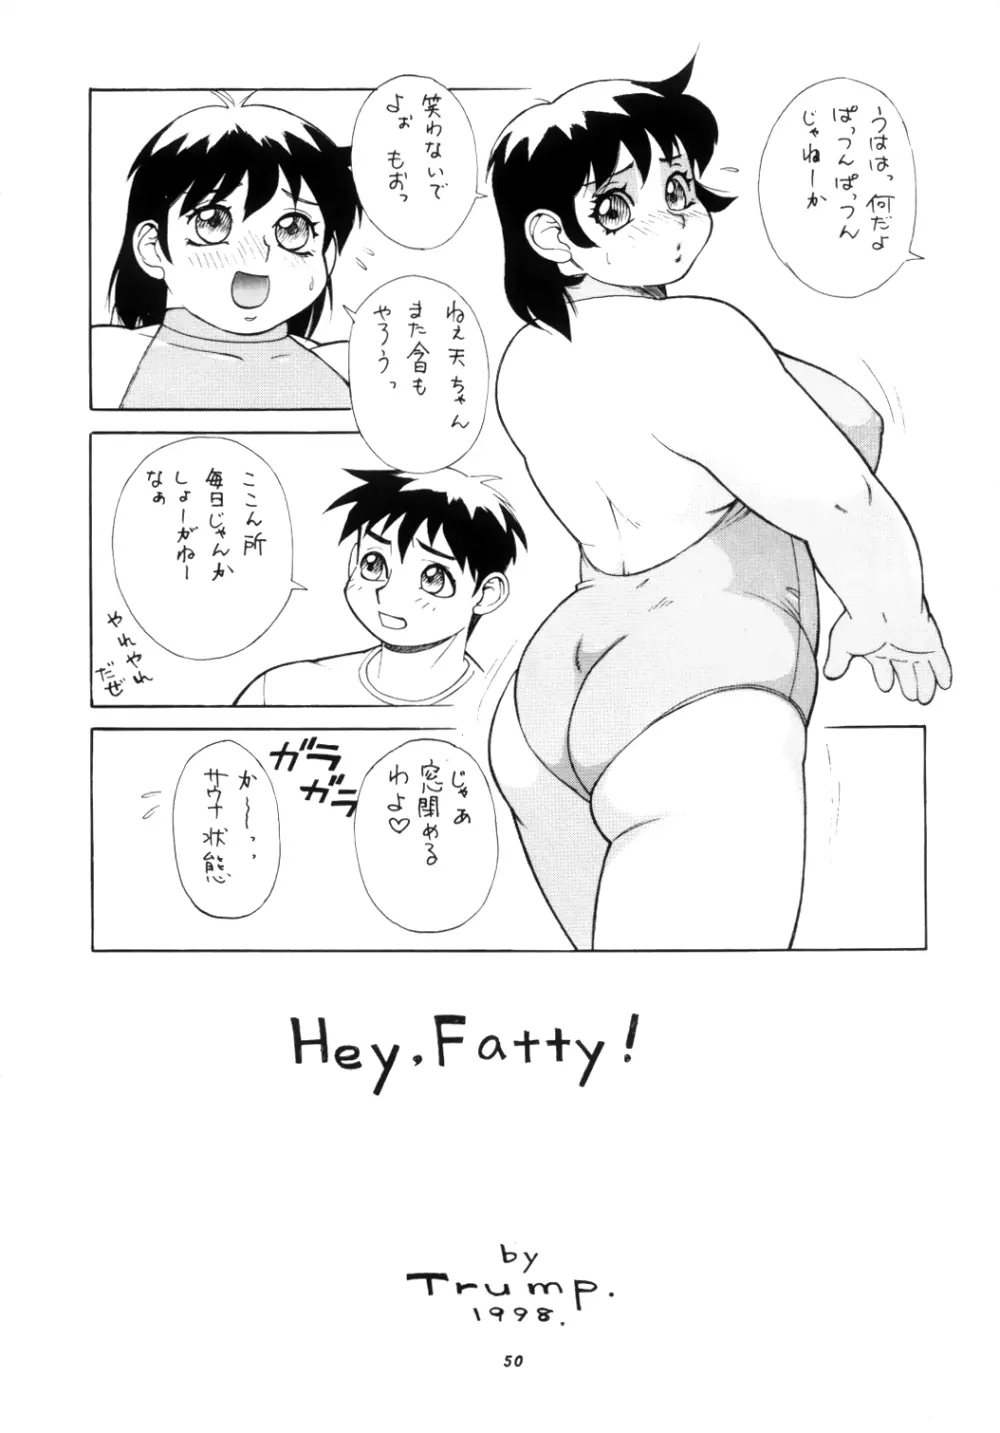 Hey! Fatty